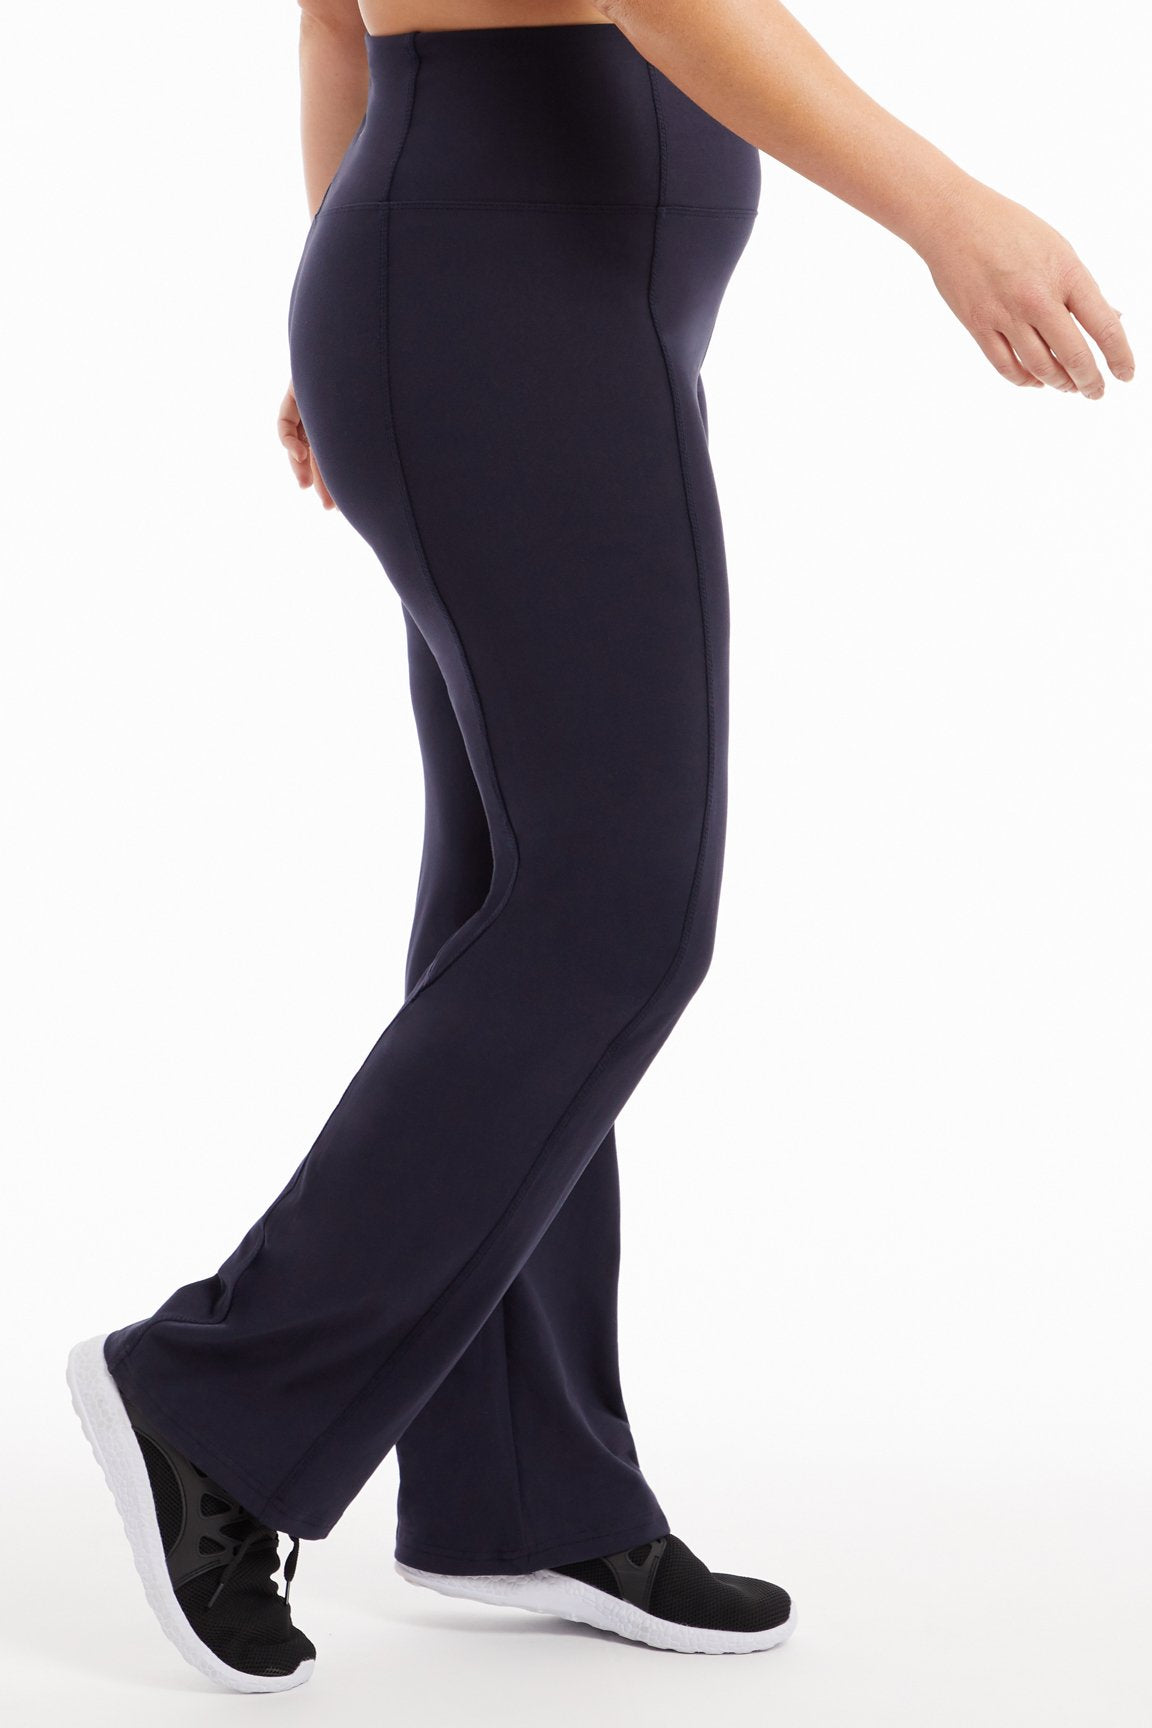 MRULIC yoga pants Stretch Yoga Mesh High Women's Waist Pants Stitching  Shorts Yoga Pants Black + L 